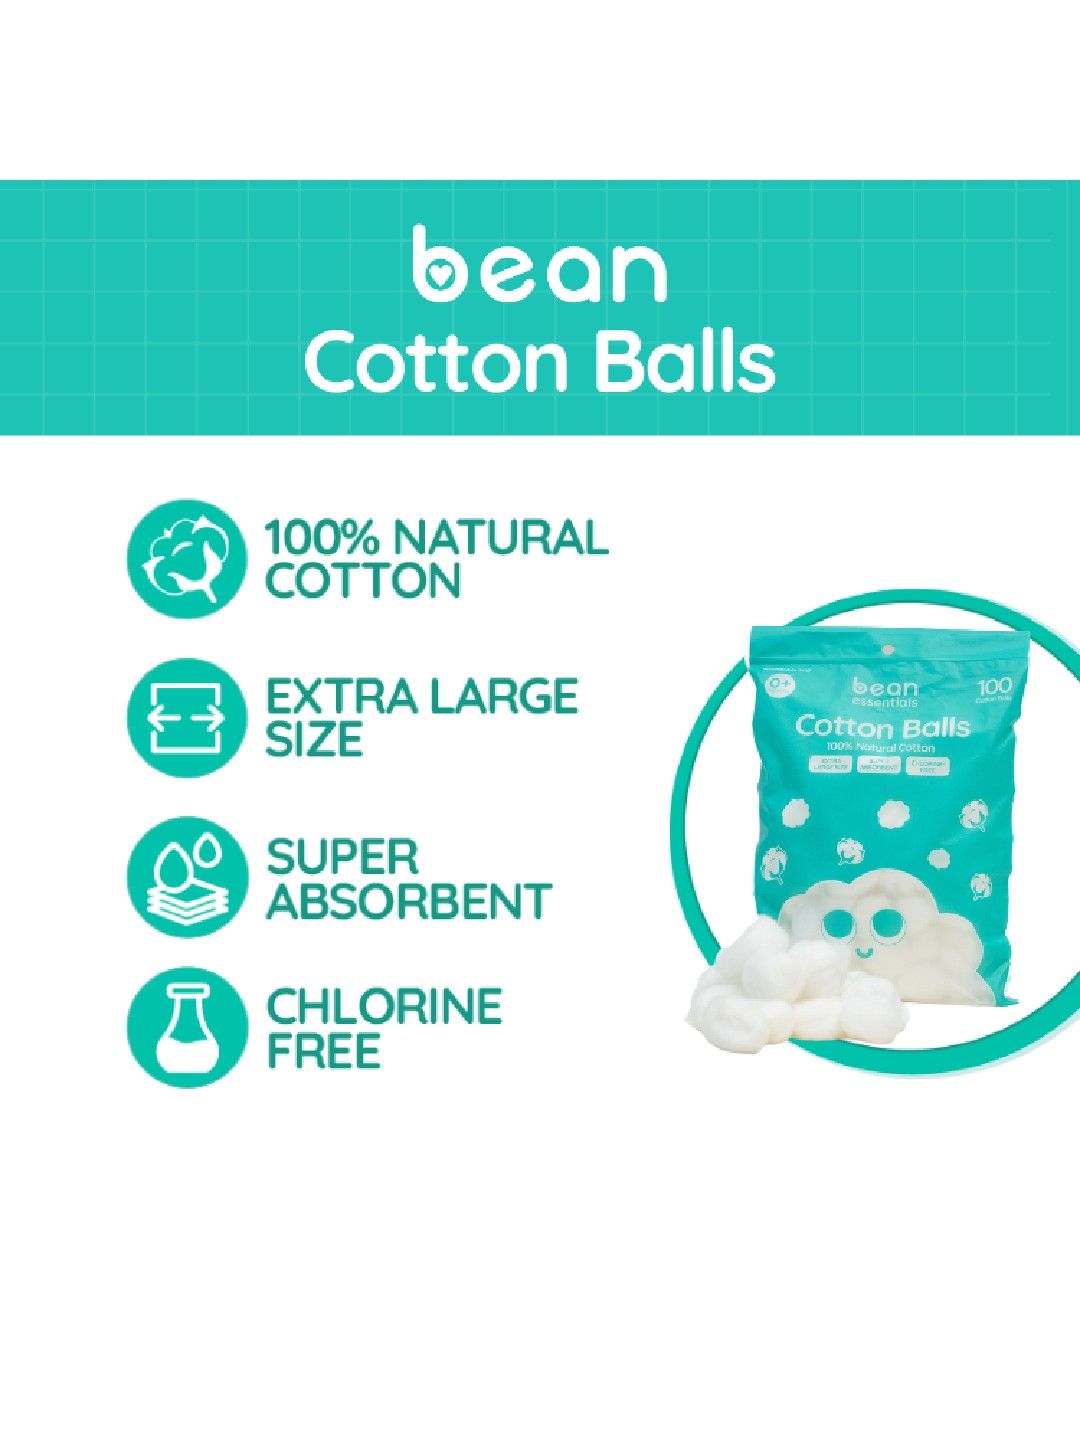 bean essentials [Bundle of 3] Baby Cotton Balls 100g (100s) x 3 (No Color- Image 2)